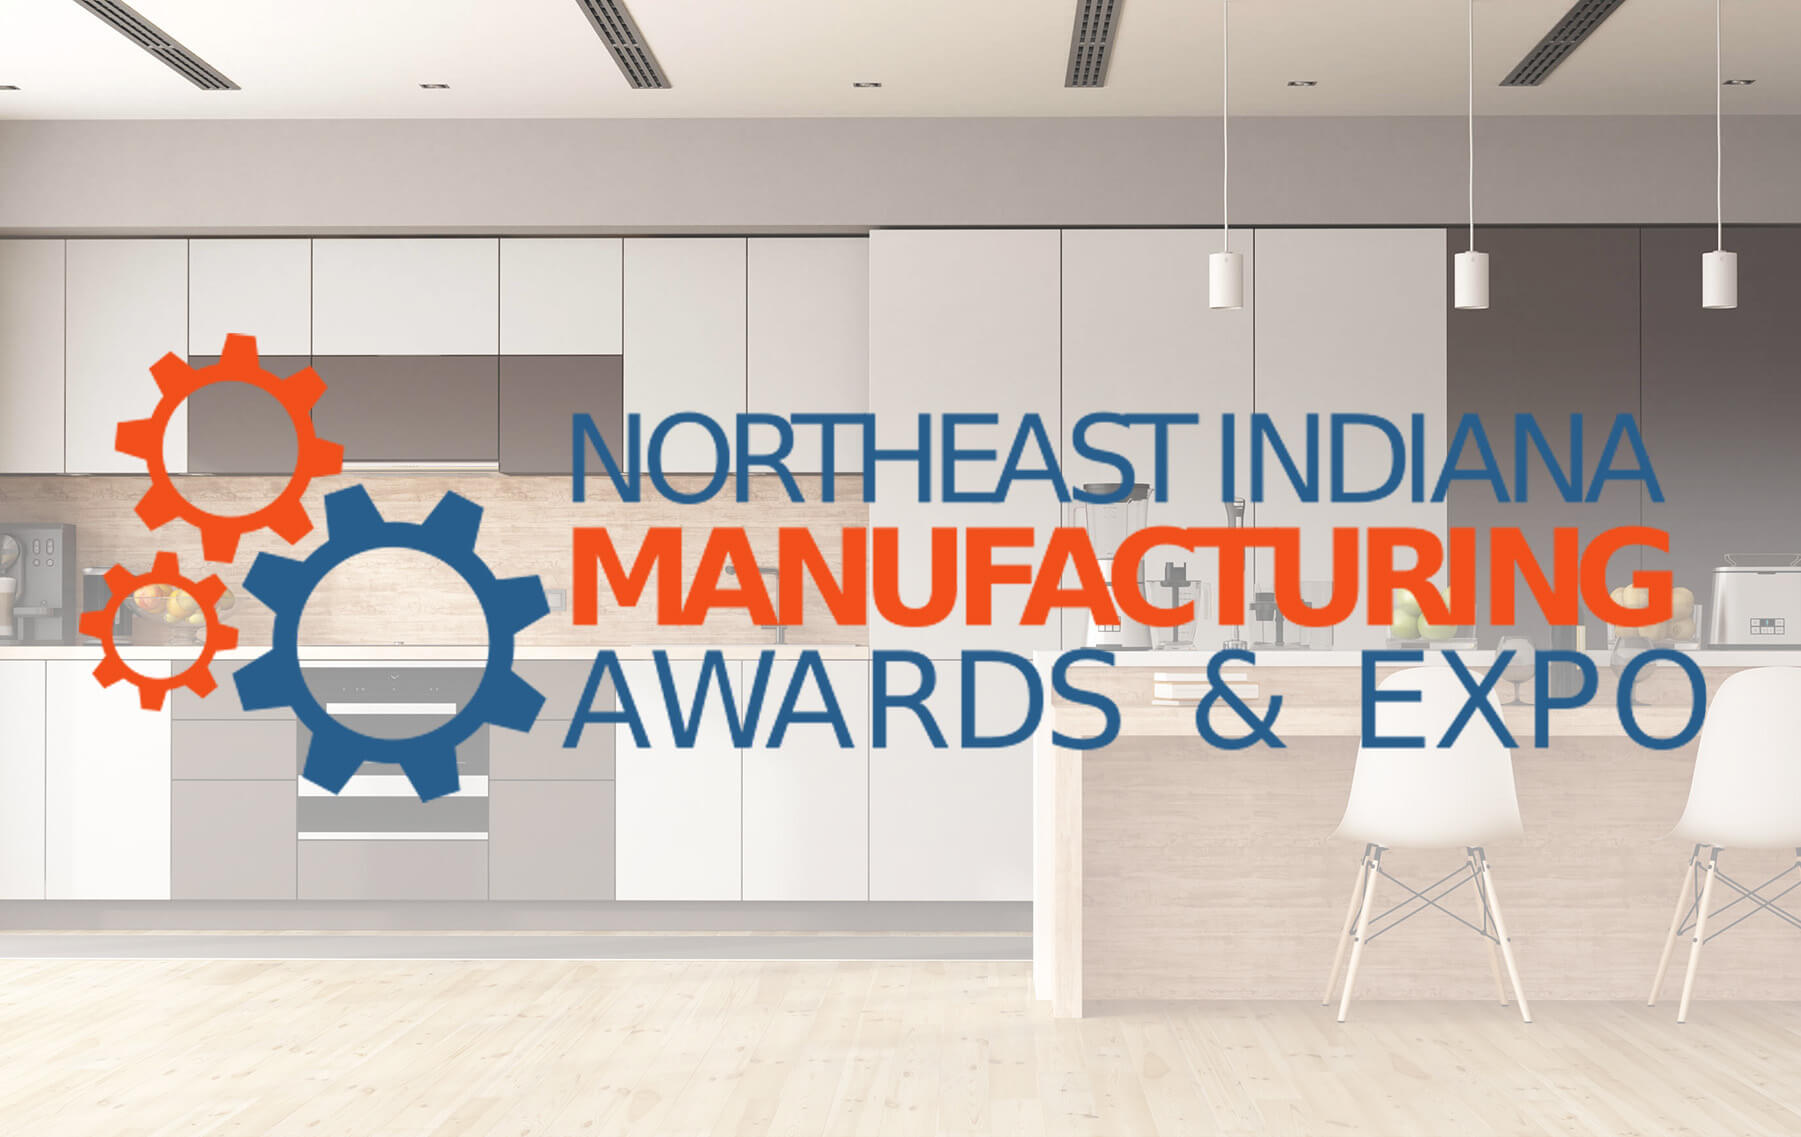 NE IN Manufacturing Awards & Expo